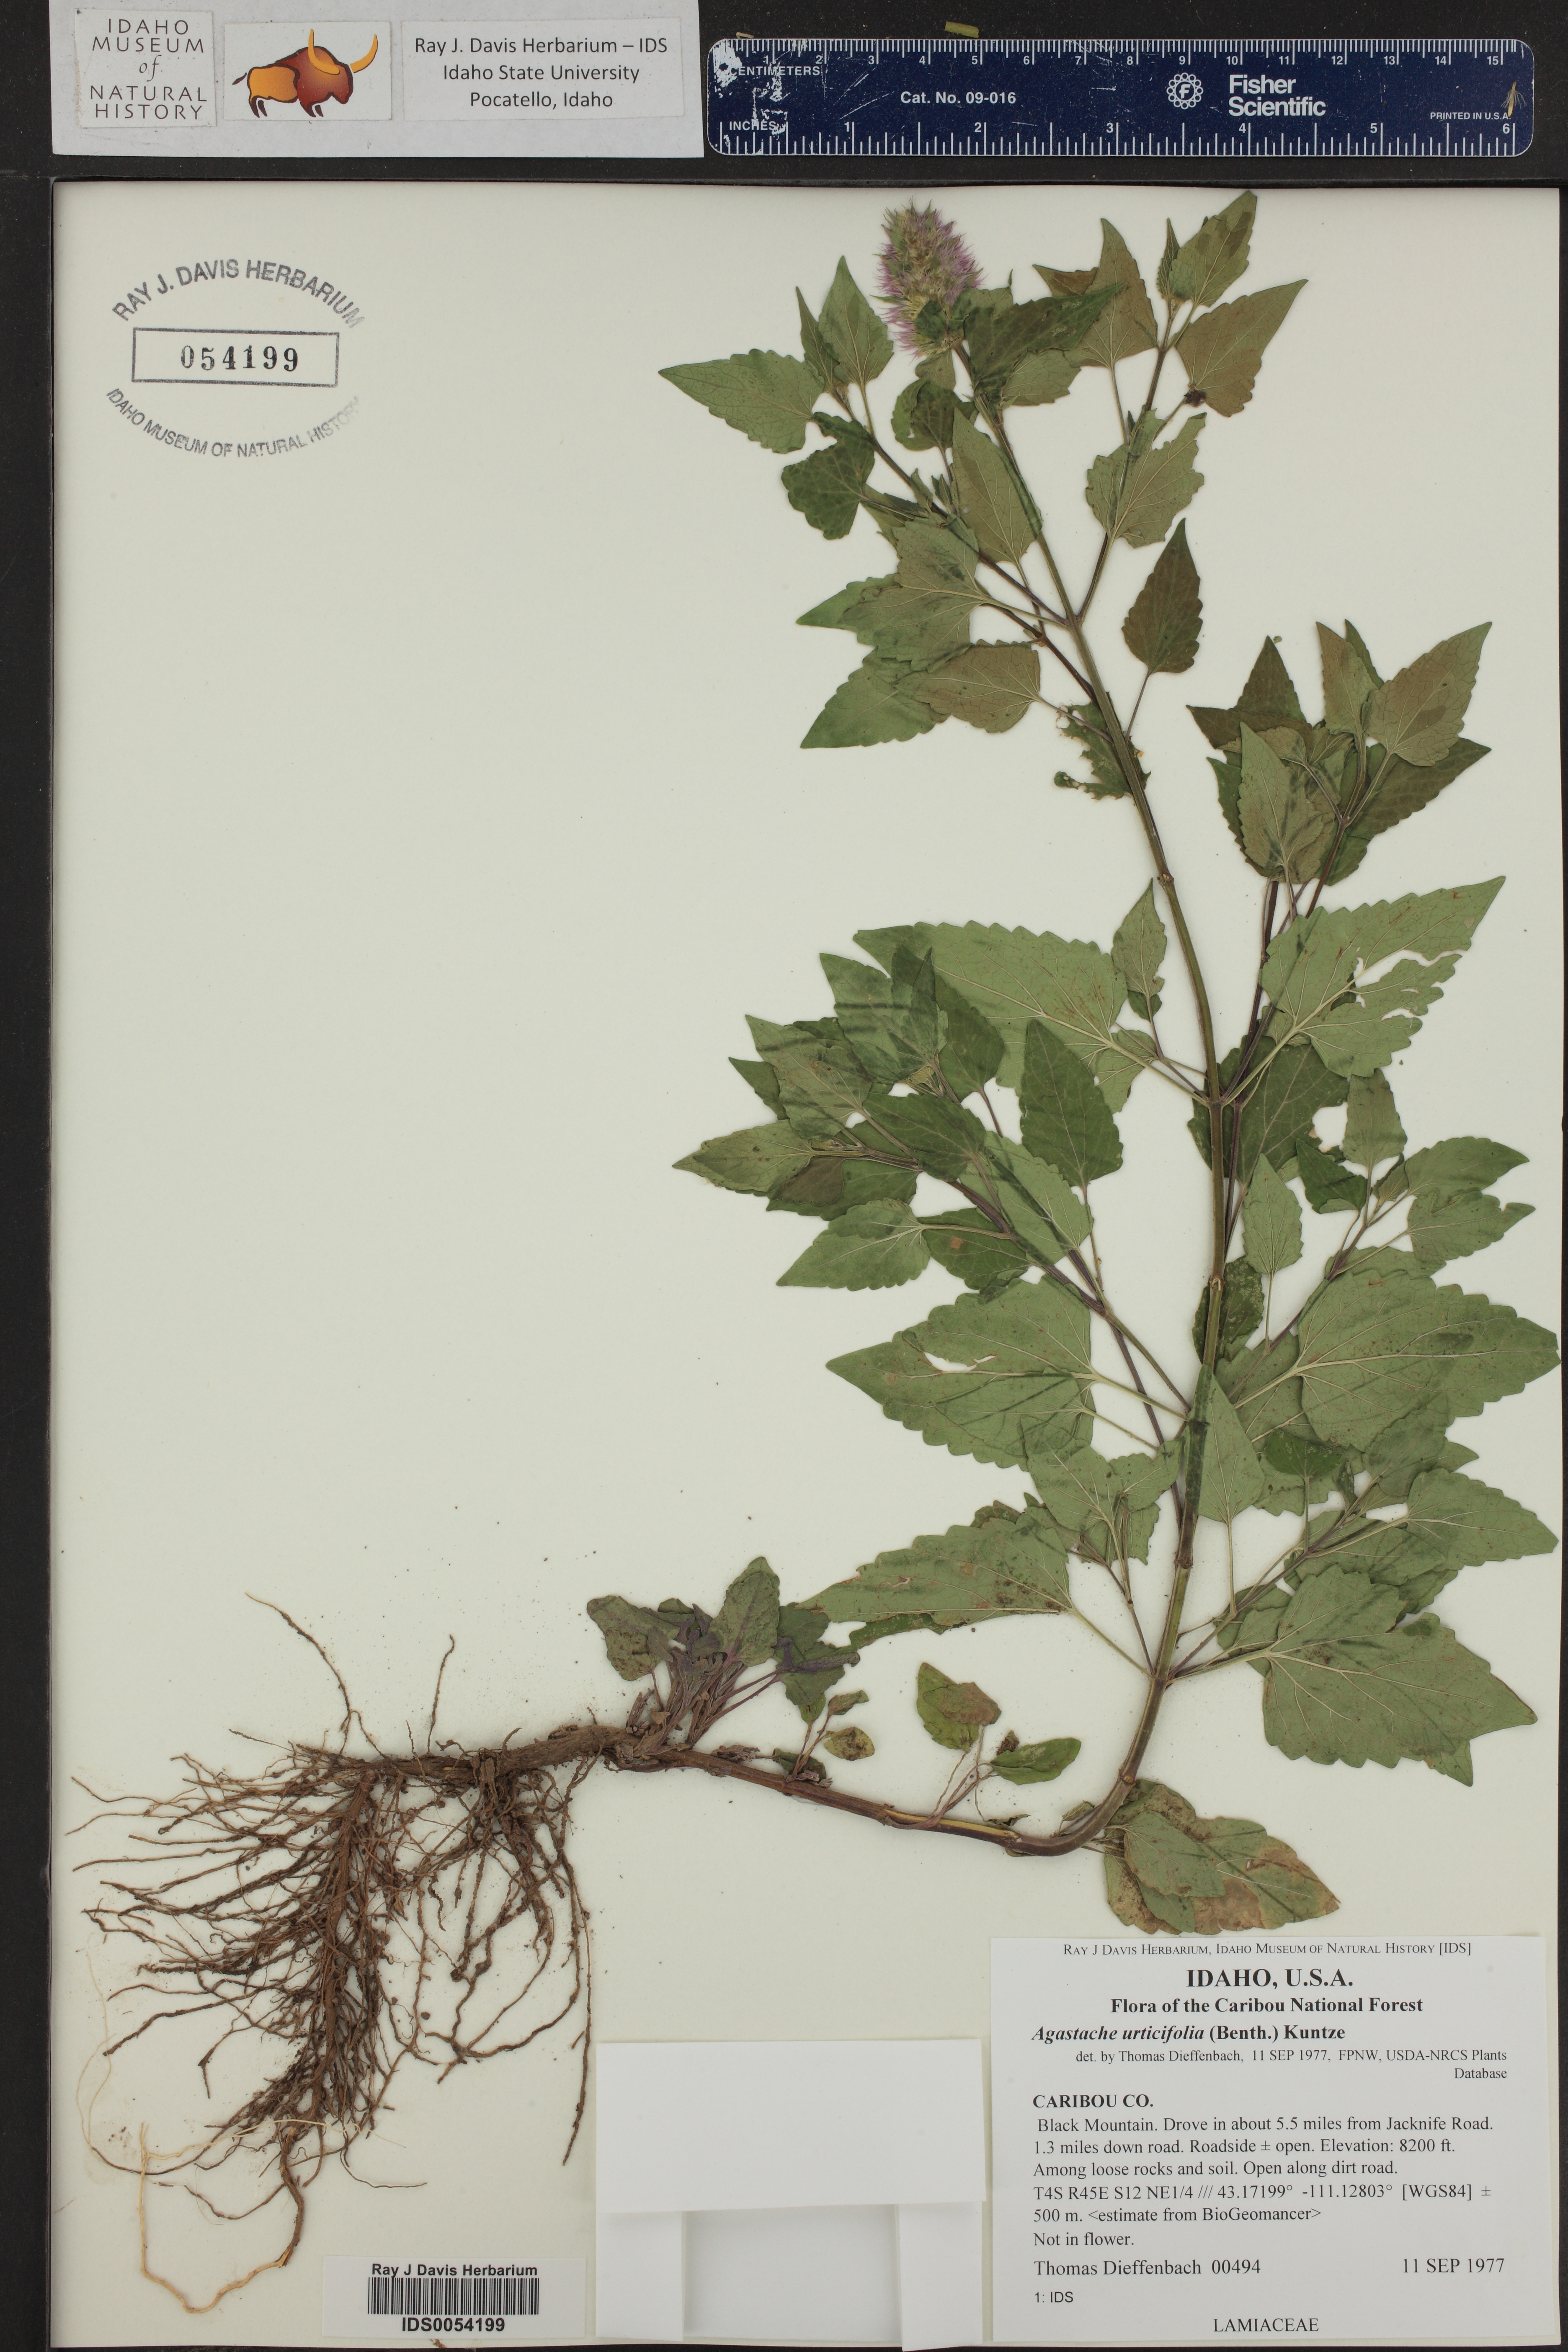 Agastache urticifolia ()